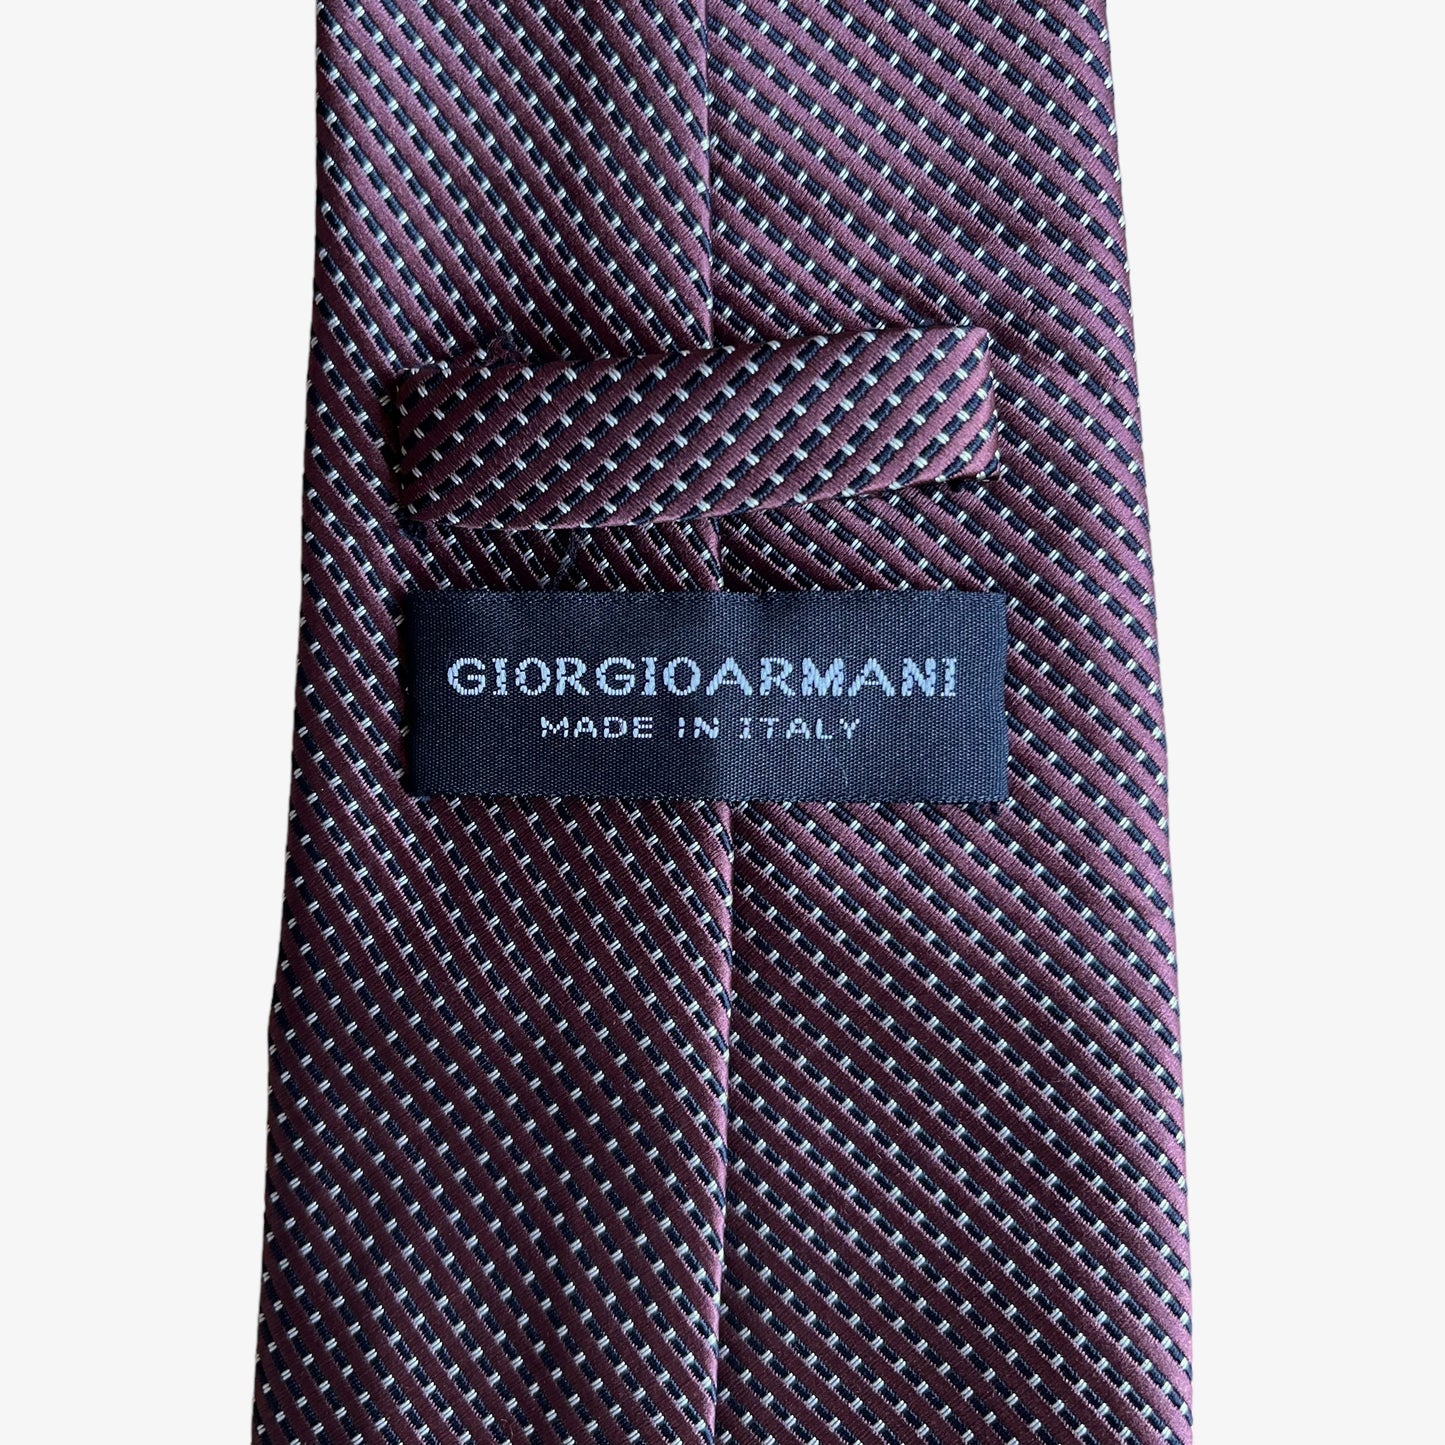 Vintage 90s Giorgio Armani Patterned Silk Tie Label - Casspios Dream